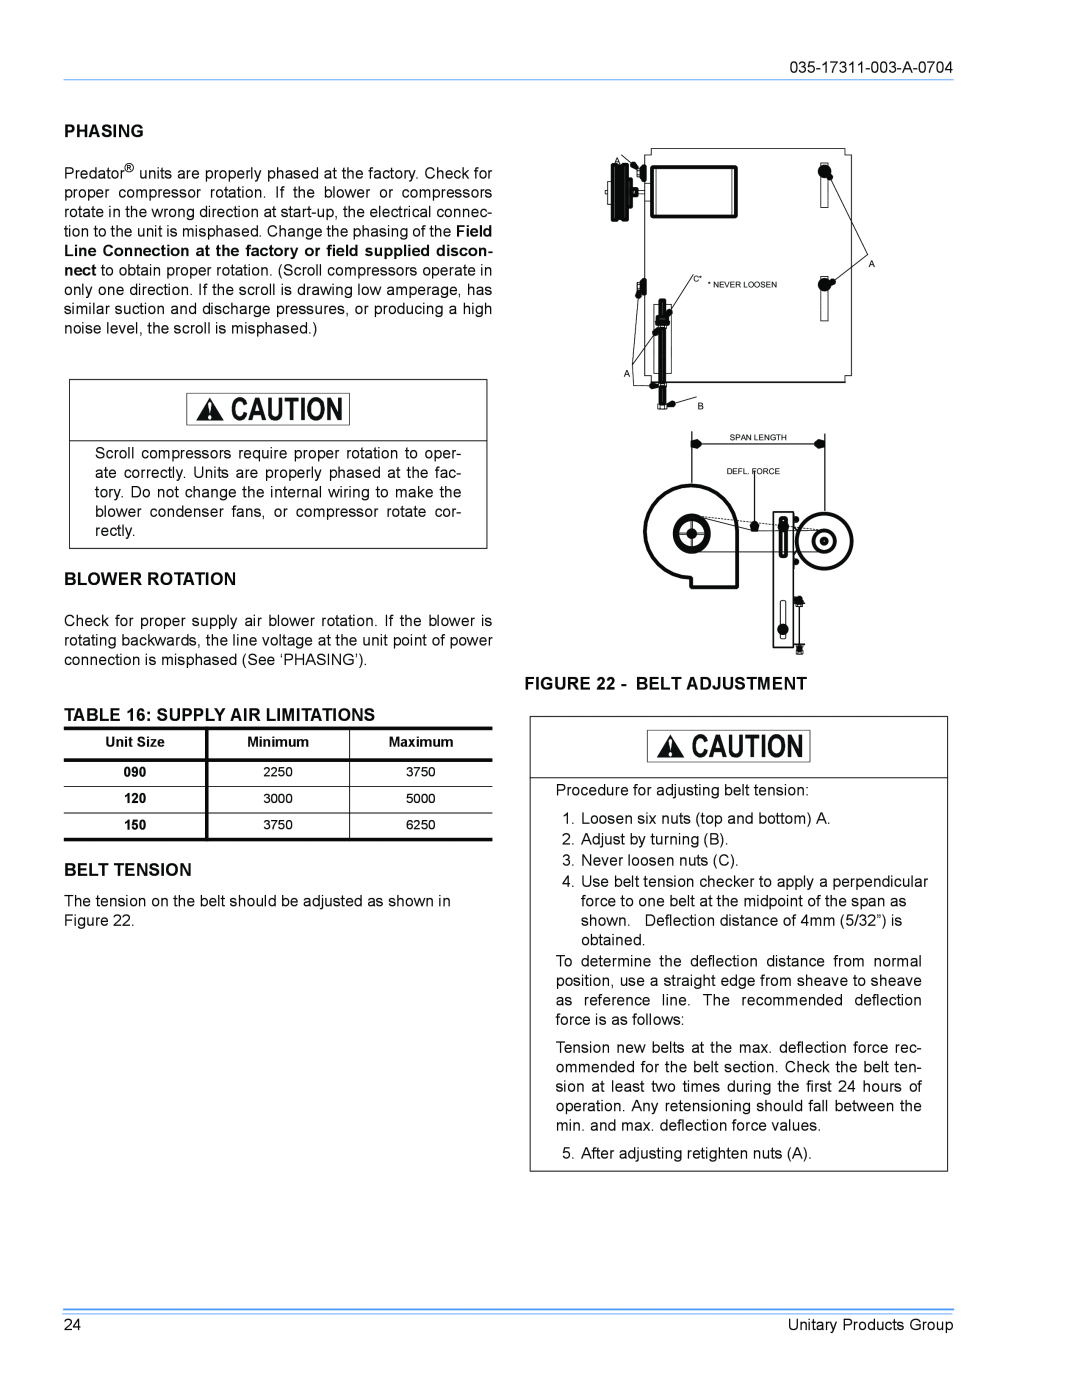 York DM090 installation manual Phasing, Blower Rotation, Supply Air Limitations, Belt Tension, Belt Adjustment 